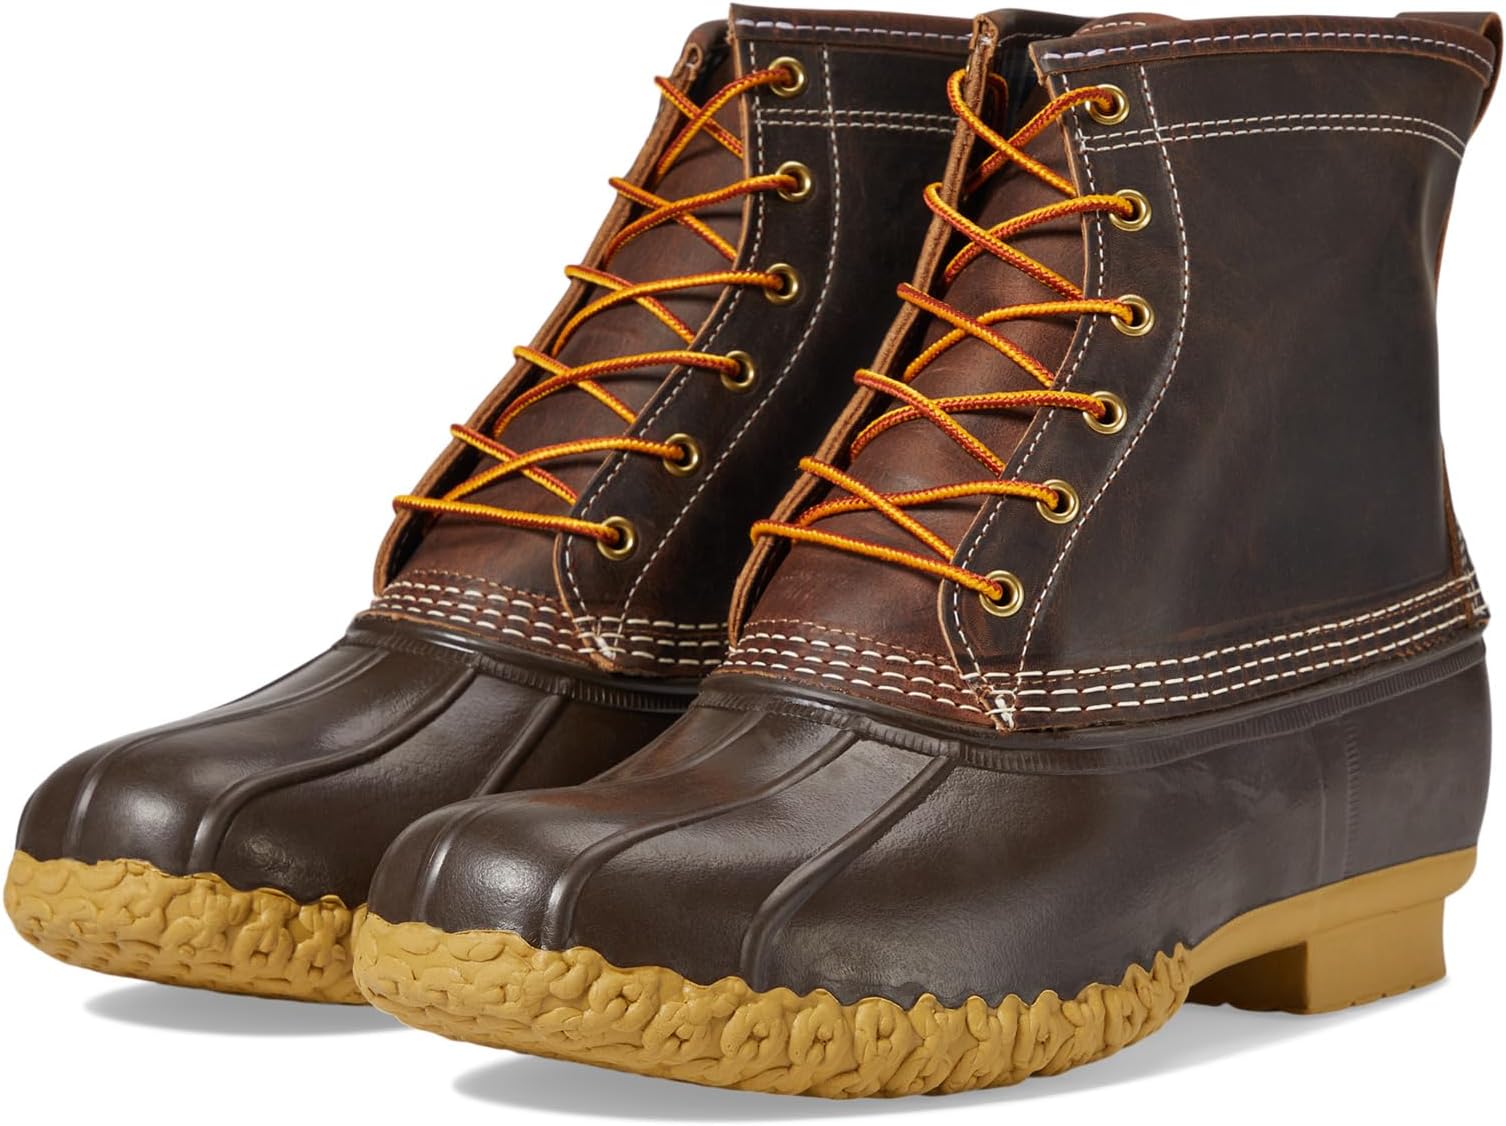 Зимние ботинки Bean Boot 8 Leather Primaloft Flannel Lined L.L.Bean, цвет Classic Brown/Bean Boot Brown/Gum/Iron brown pierce iron gold